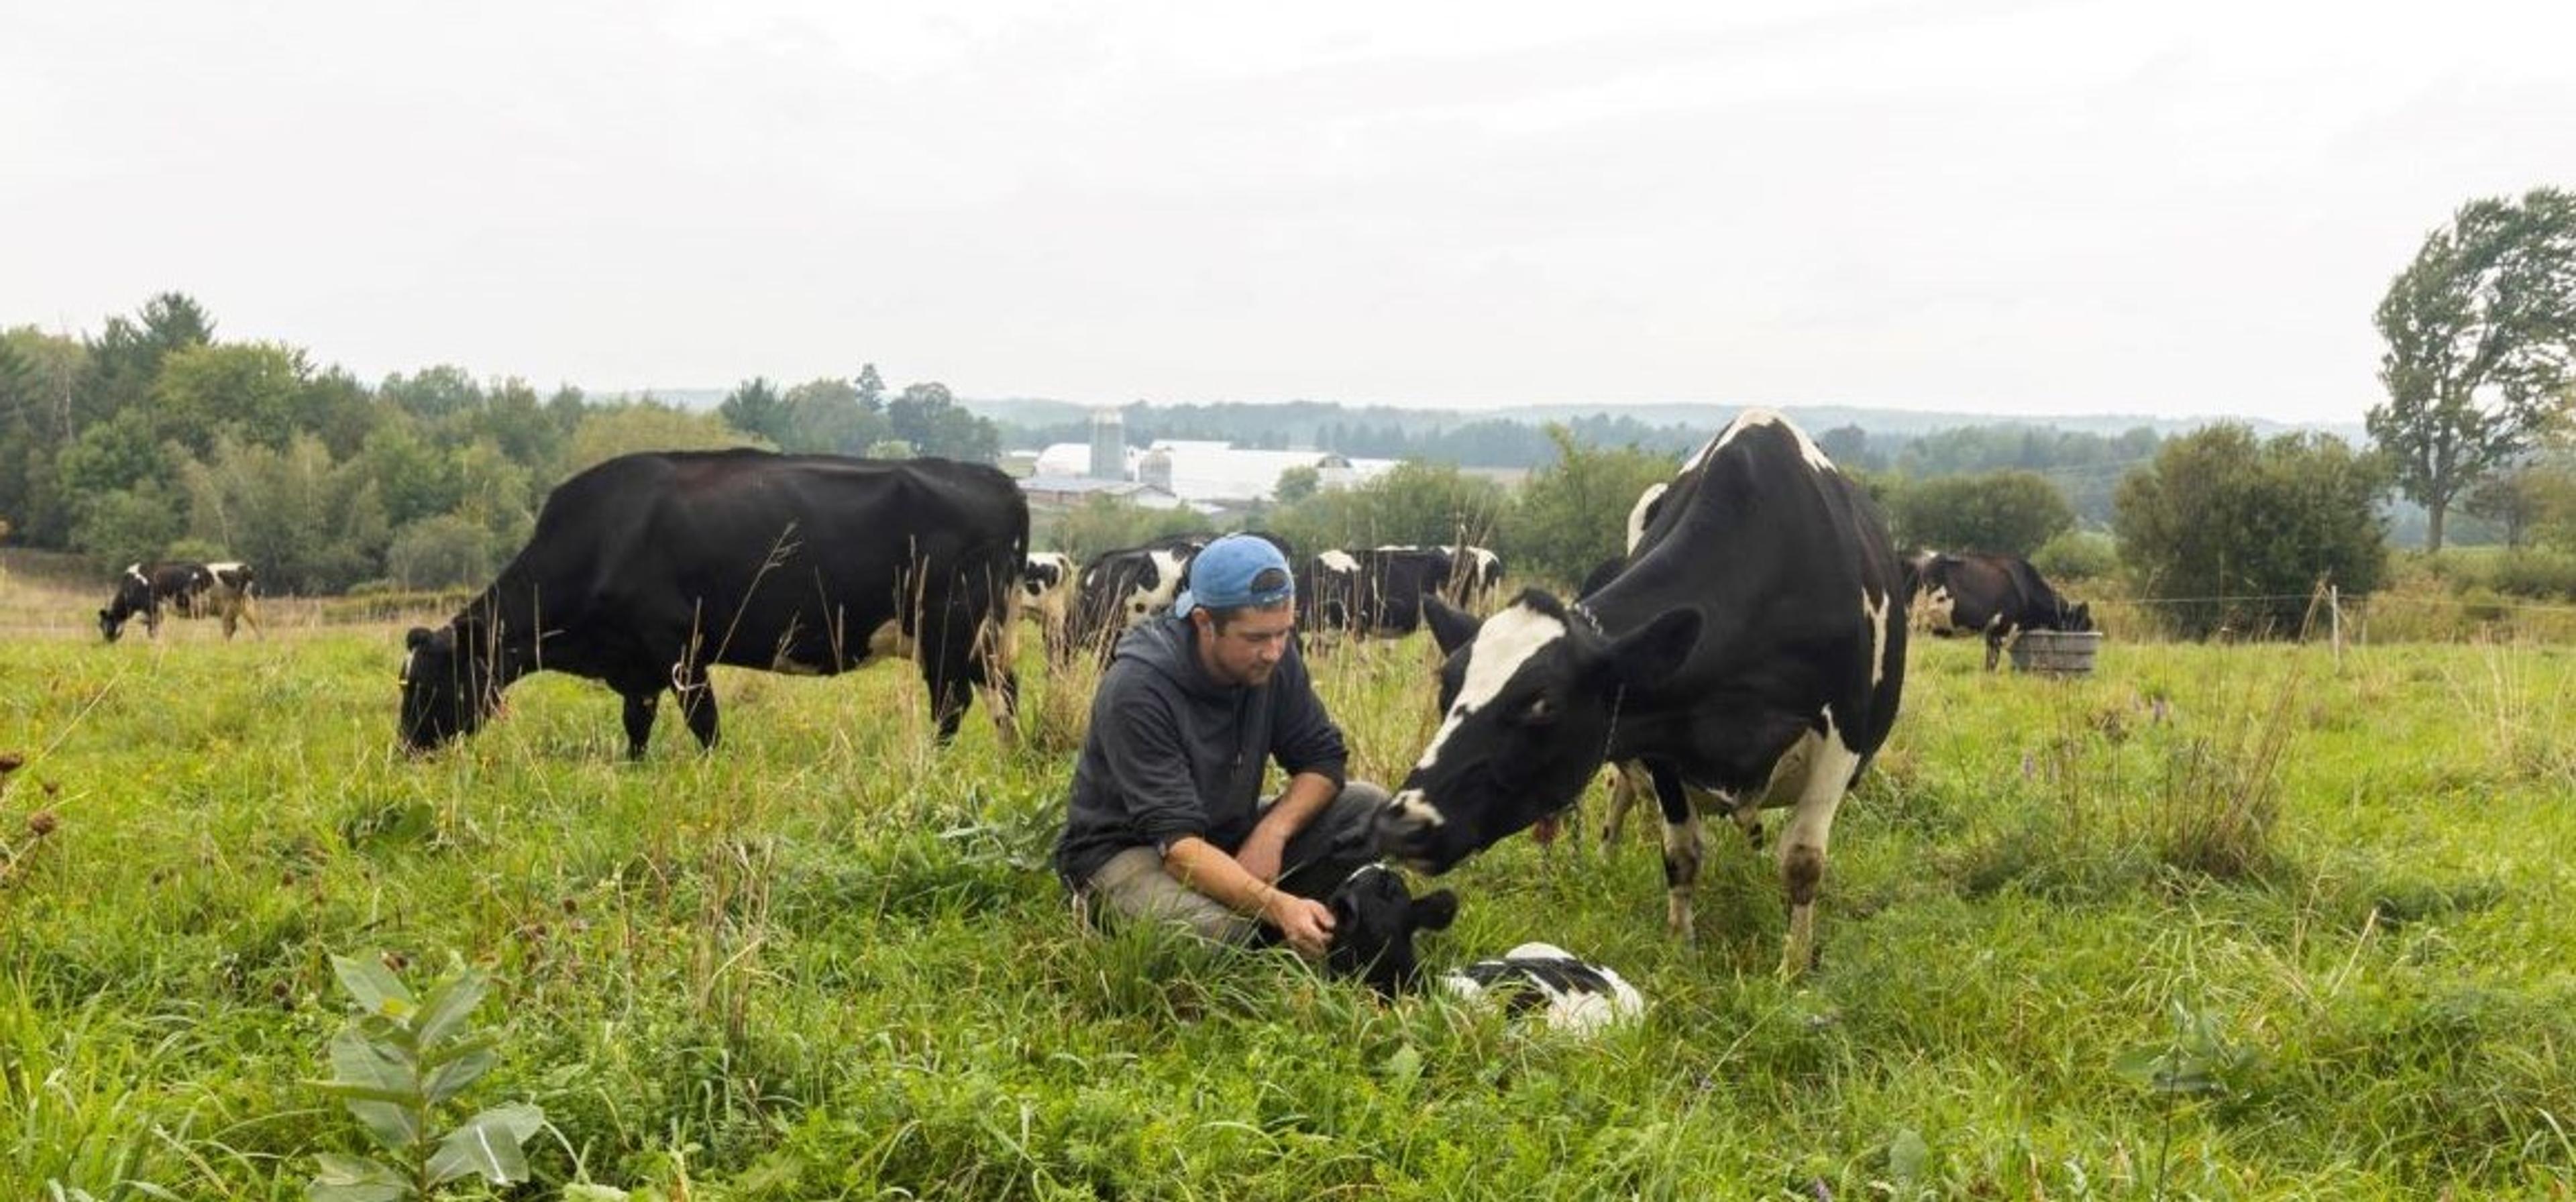 A Vermont farmer pets a calf as cows look on.